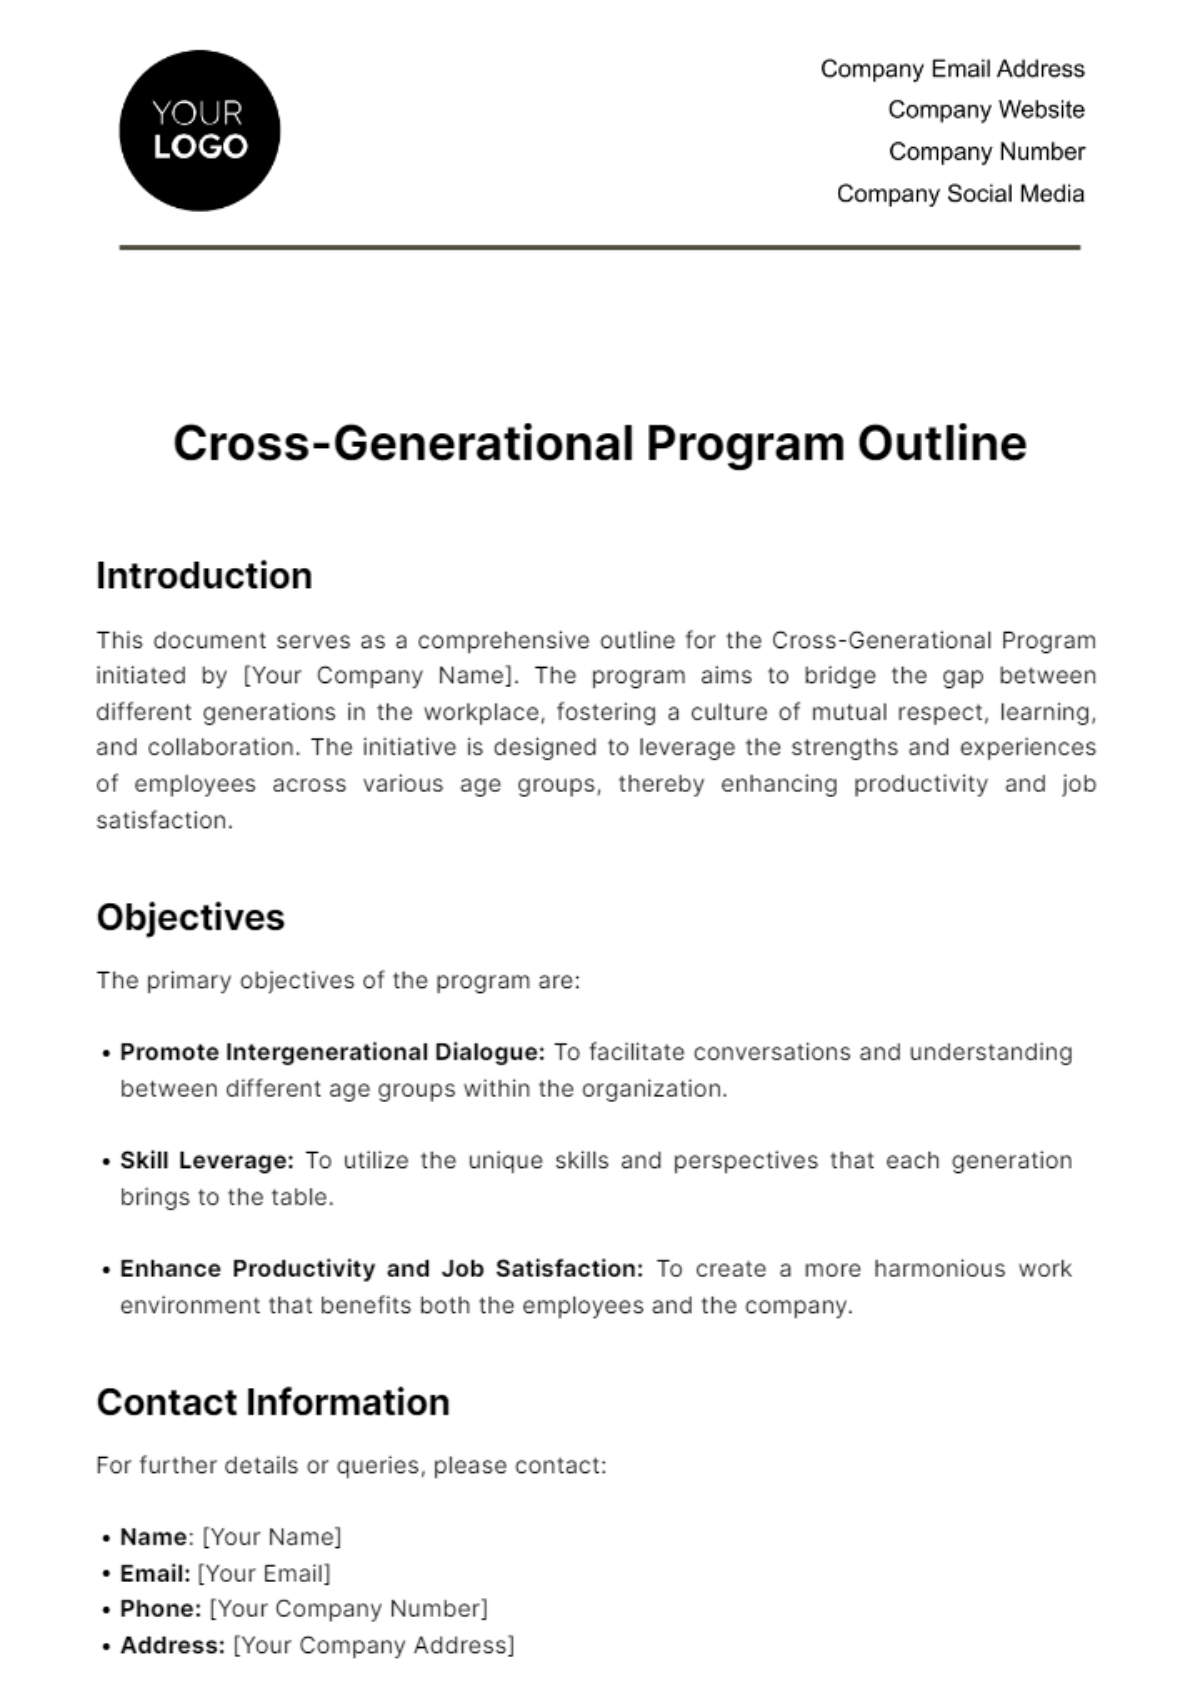 Cross-Generational Program Outline HR Template